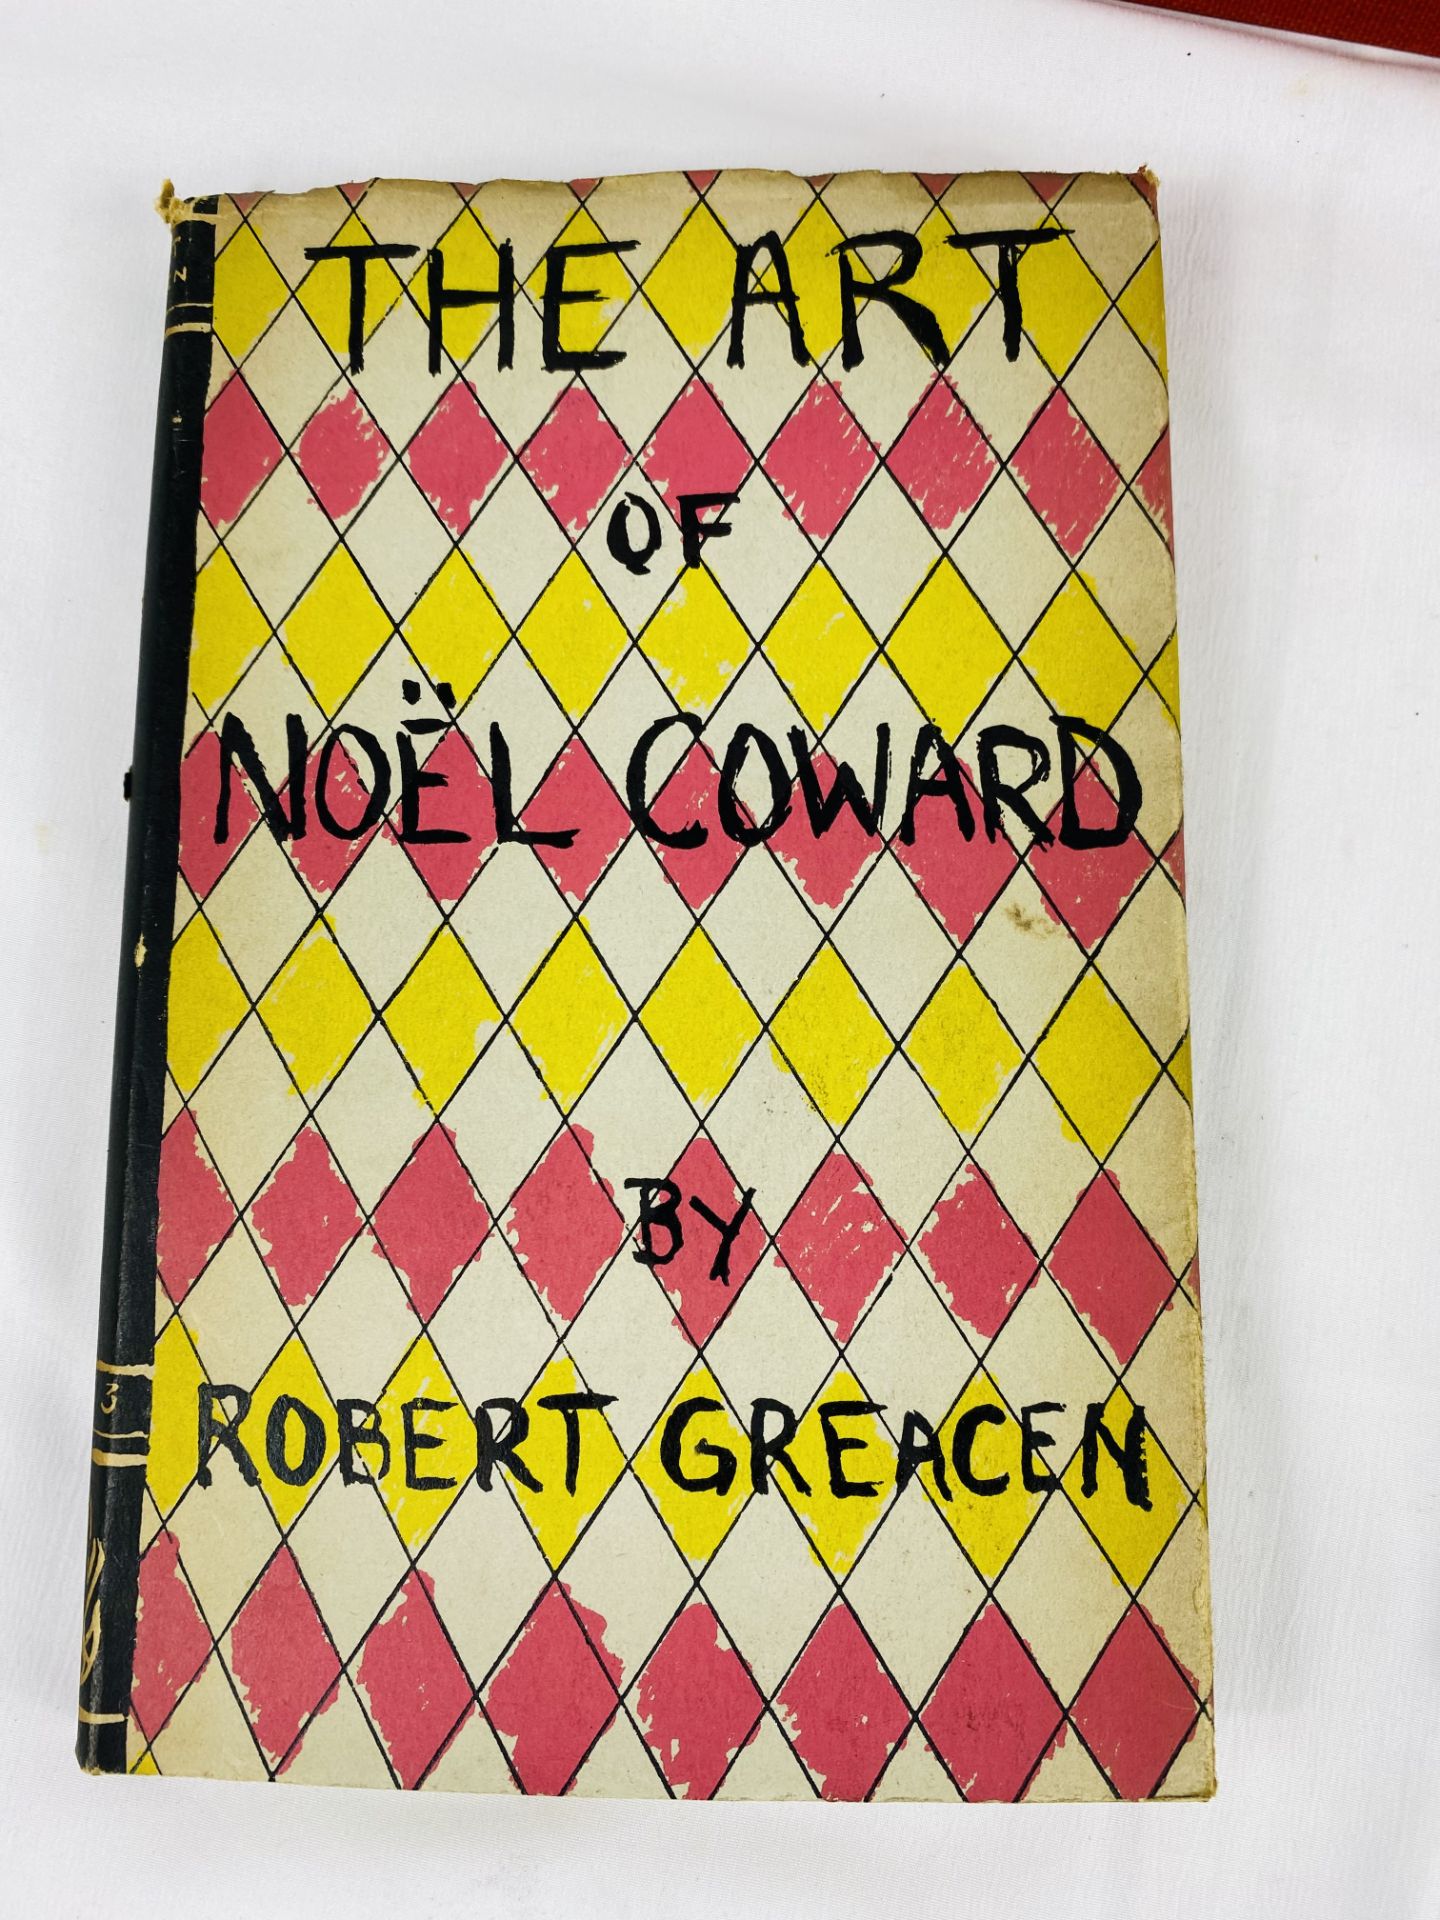 Noel Coward, Quadrille, together with two copies of The Art of Noel Coward by Robert Greacen - Bild 2 aus 6